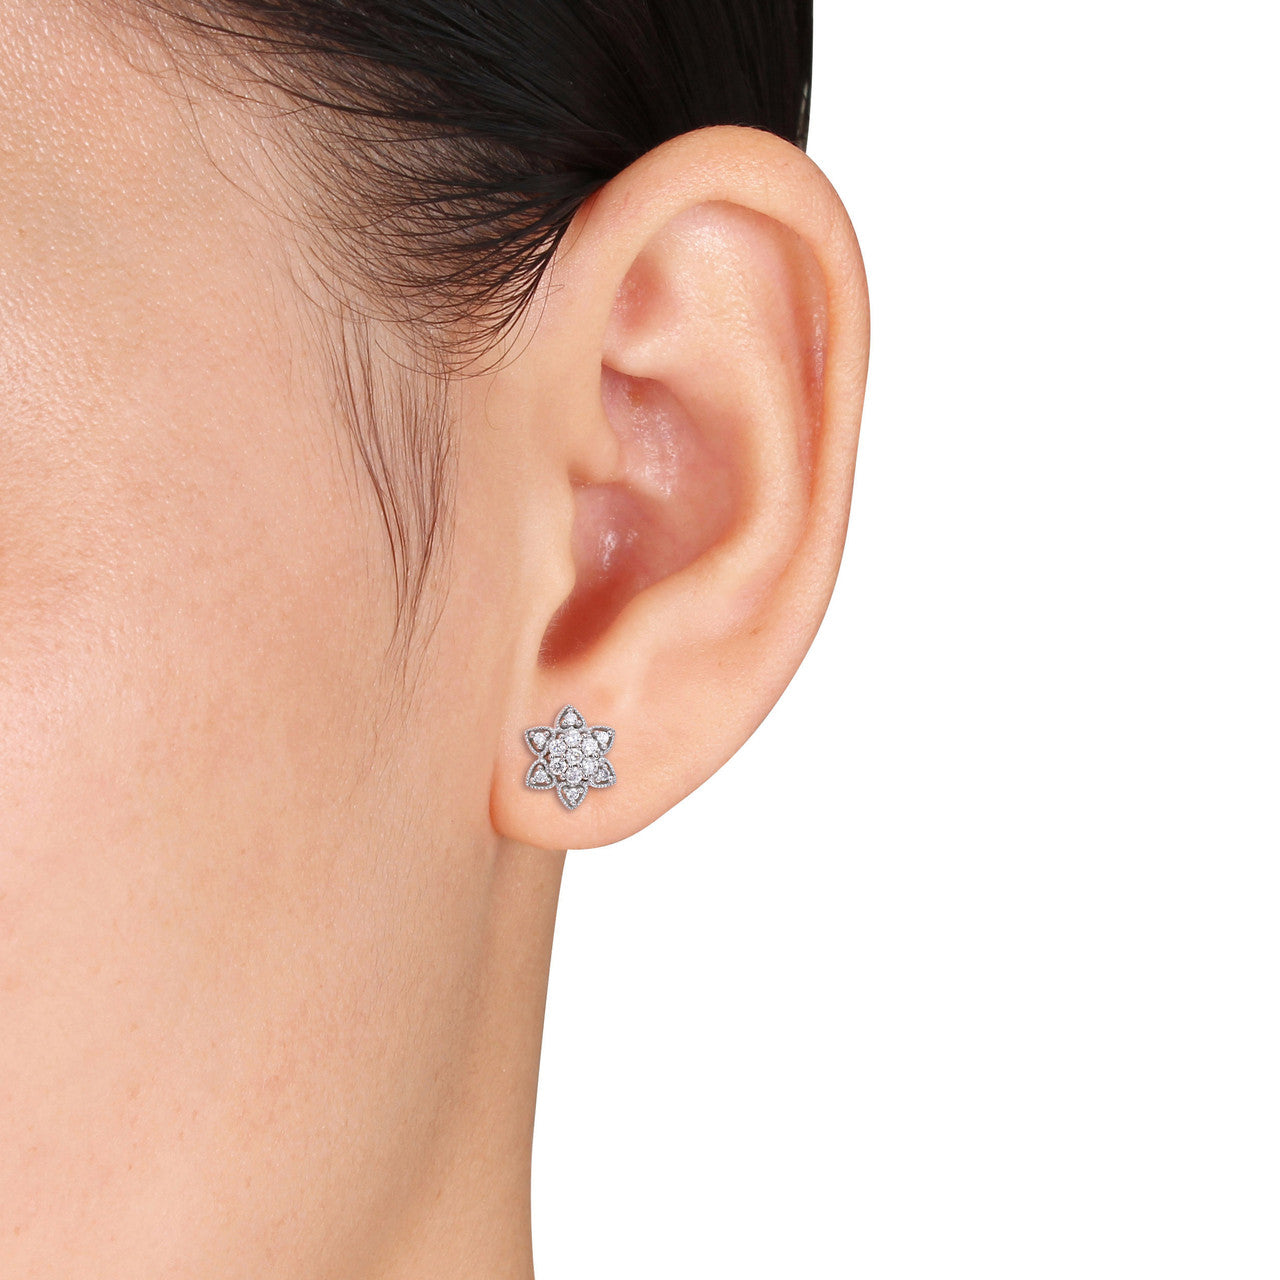 Ice Jewellery 1/2 CT Diamond Flower Star Stud Earrings in 14k White Gold - 75000005701 | Ice Jewellery Australia